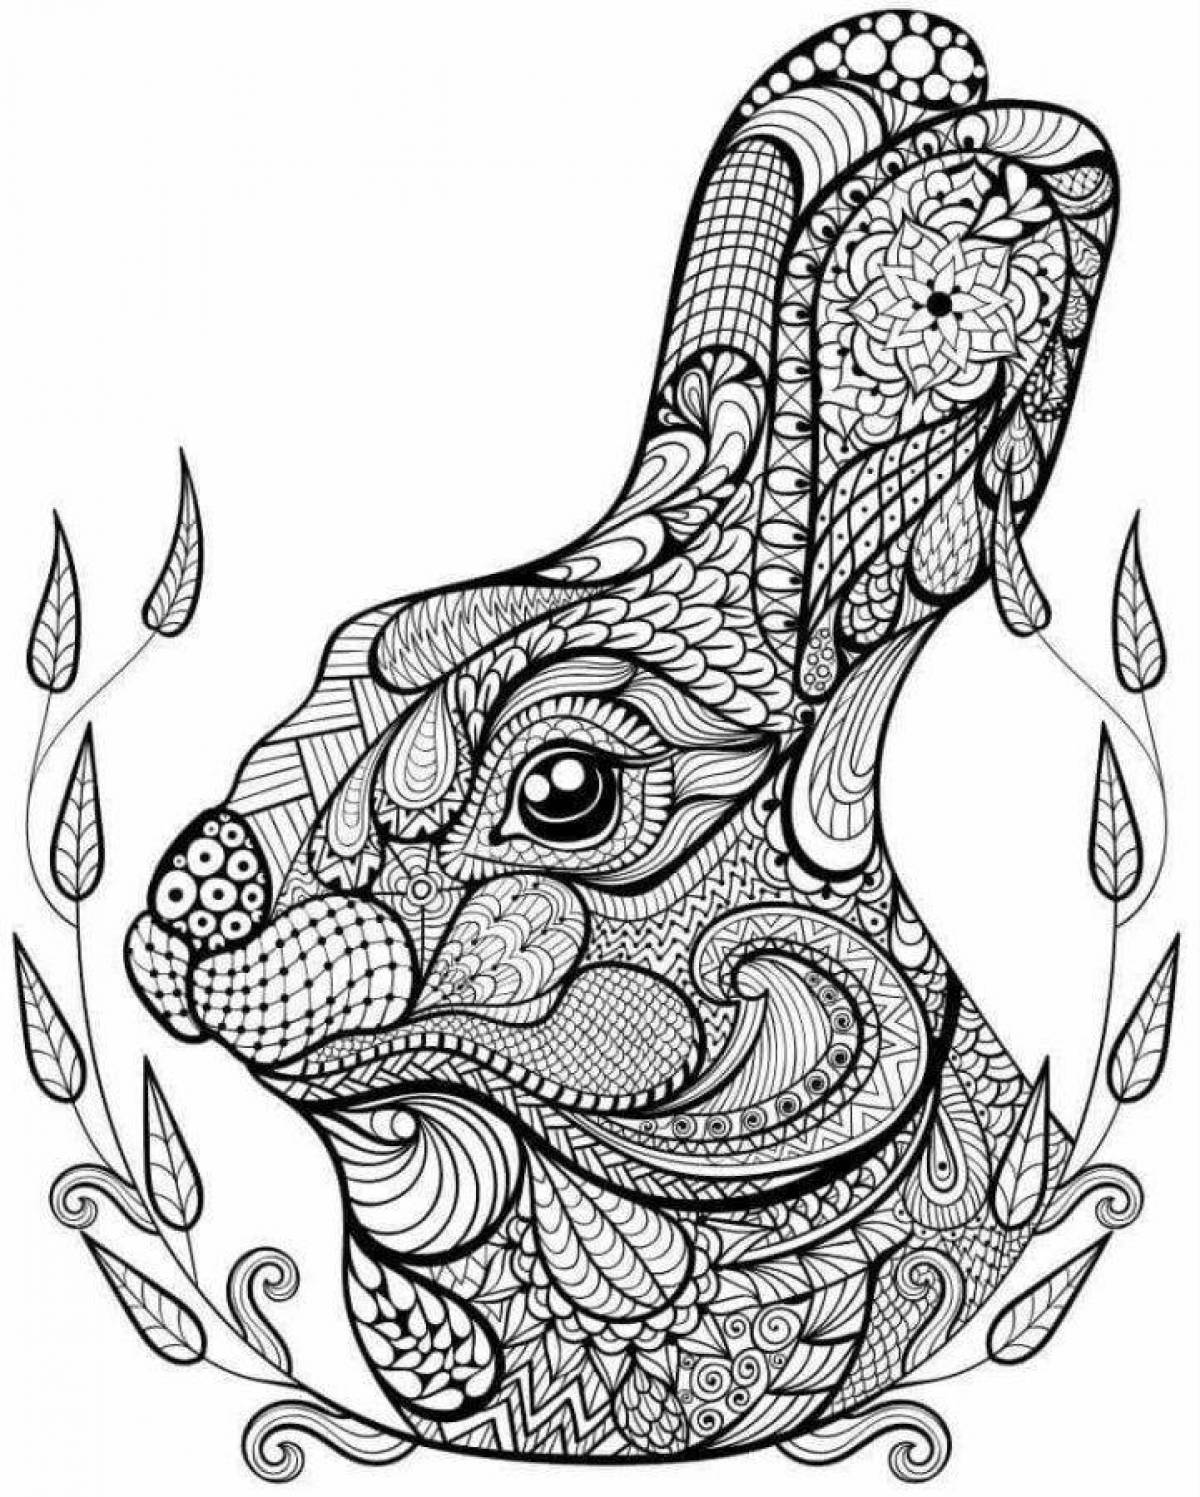 Coloring book magic antistress rabbit